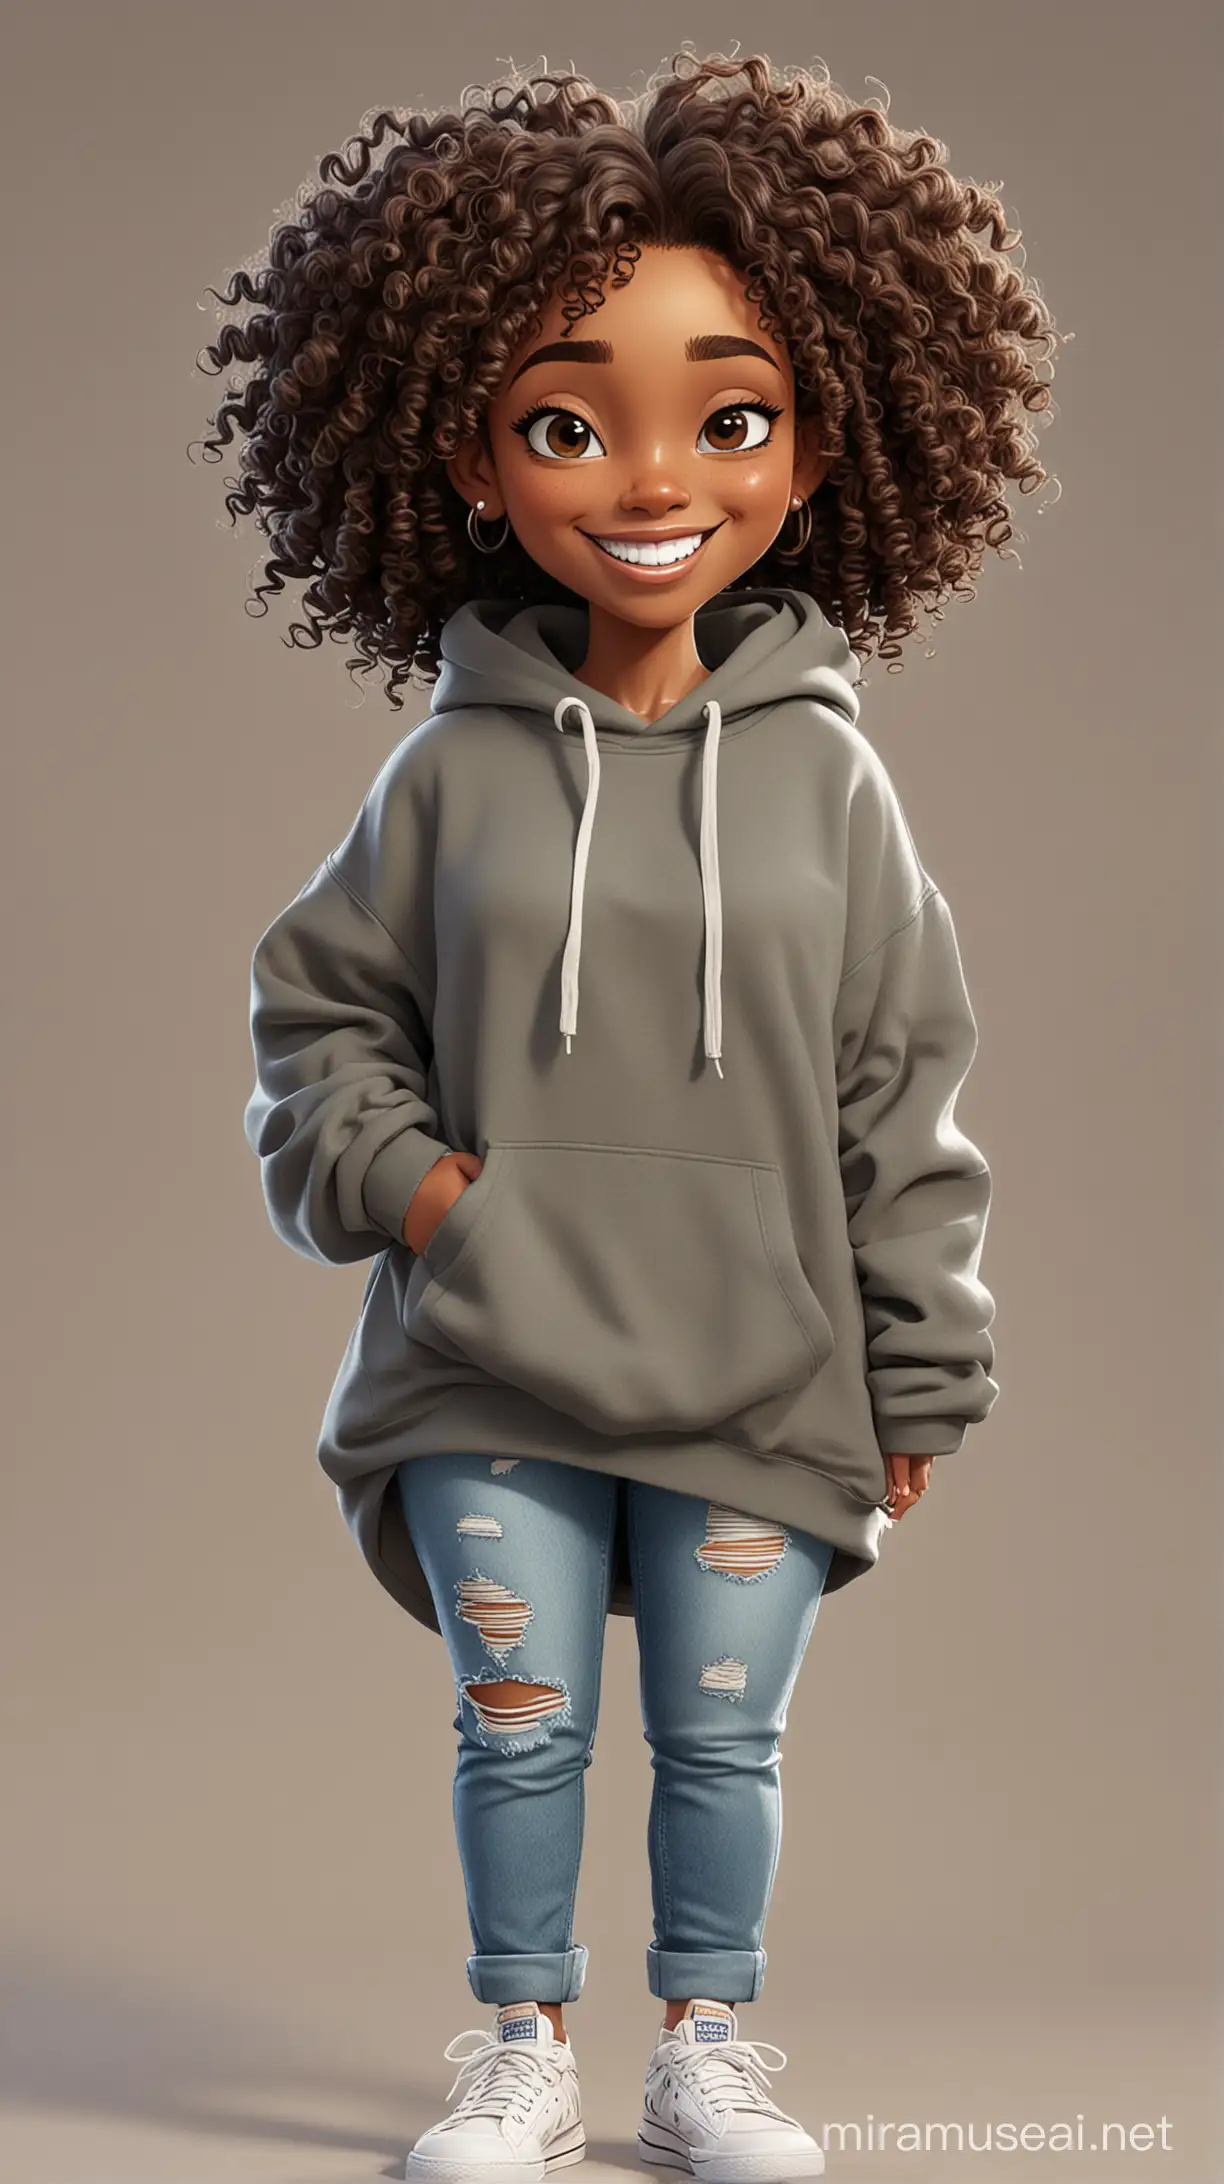 Cartoon black woman with curly hair, smiling wearing casual baggy sweatshirt 